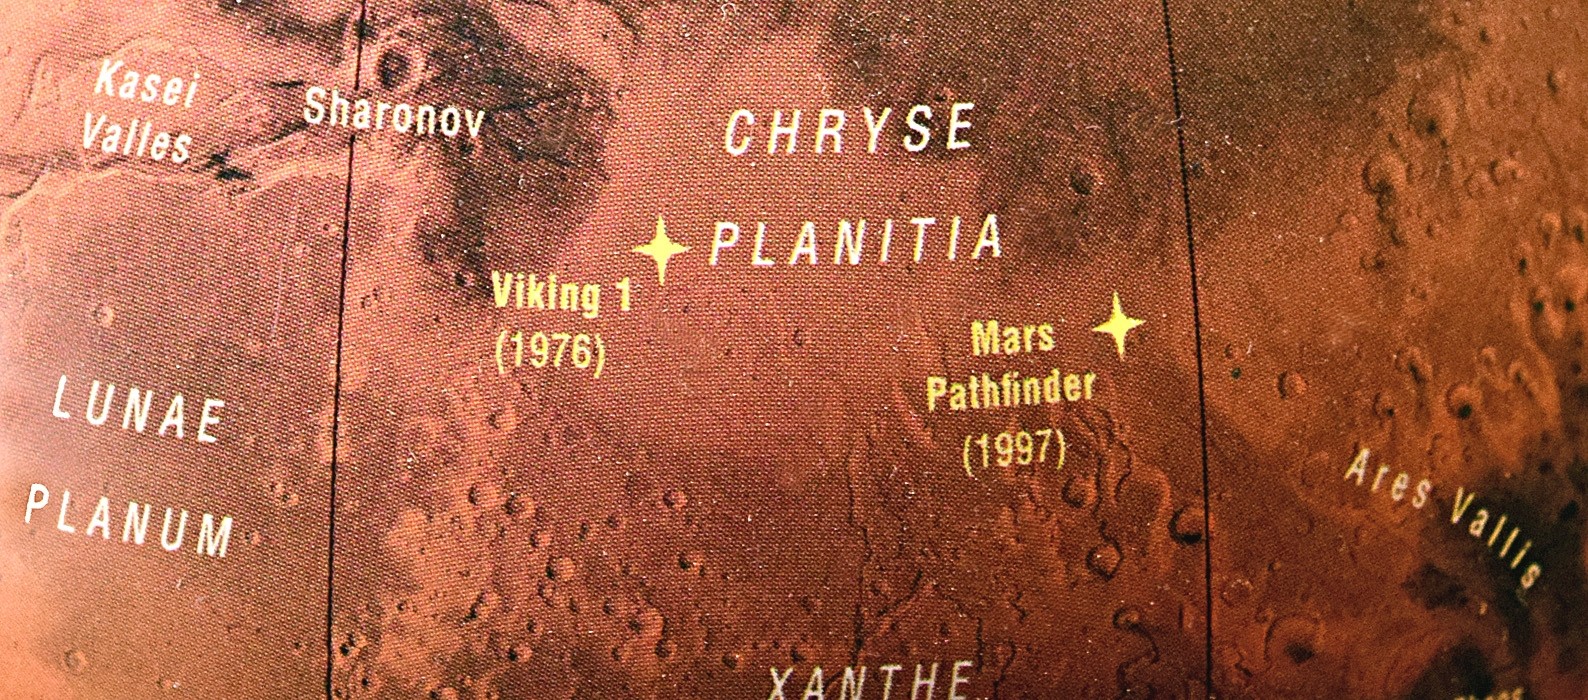 mars_6_chryse_planitia.jpg